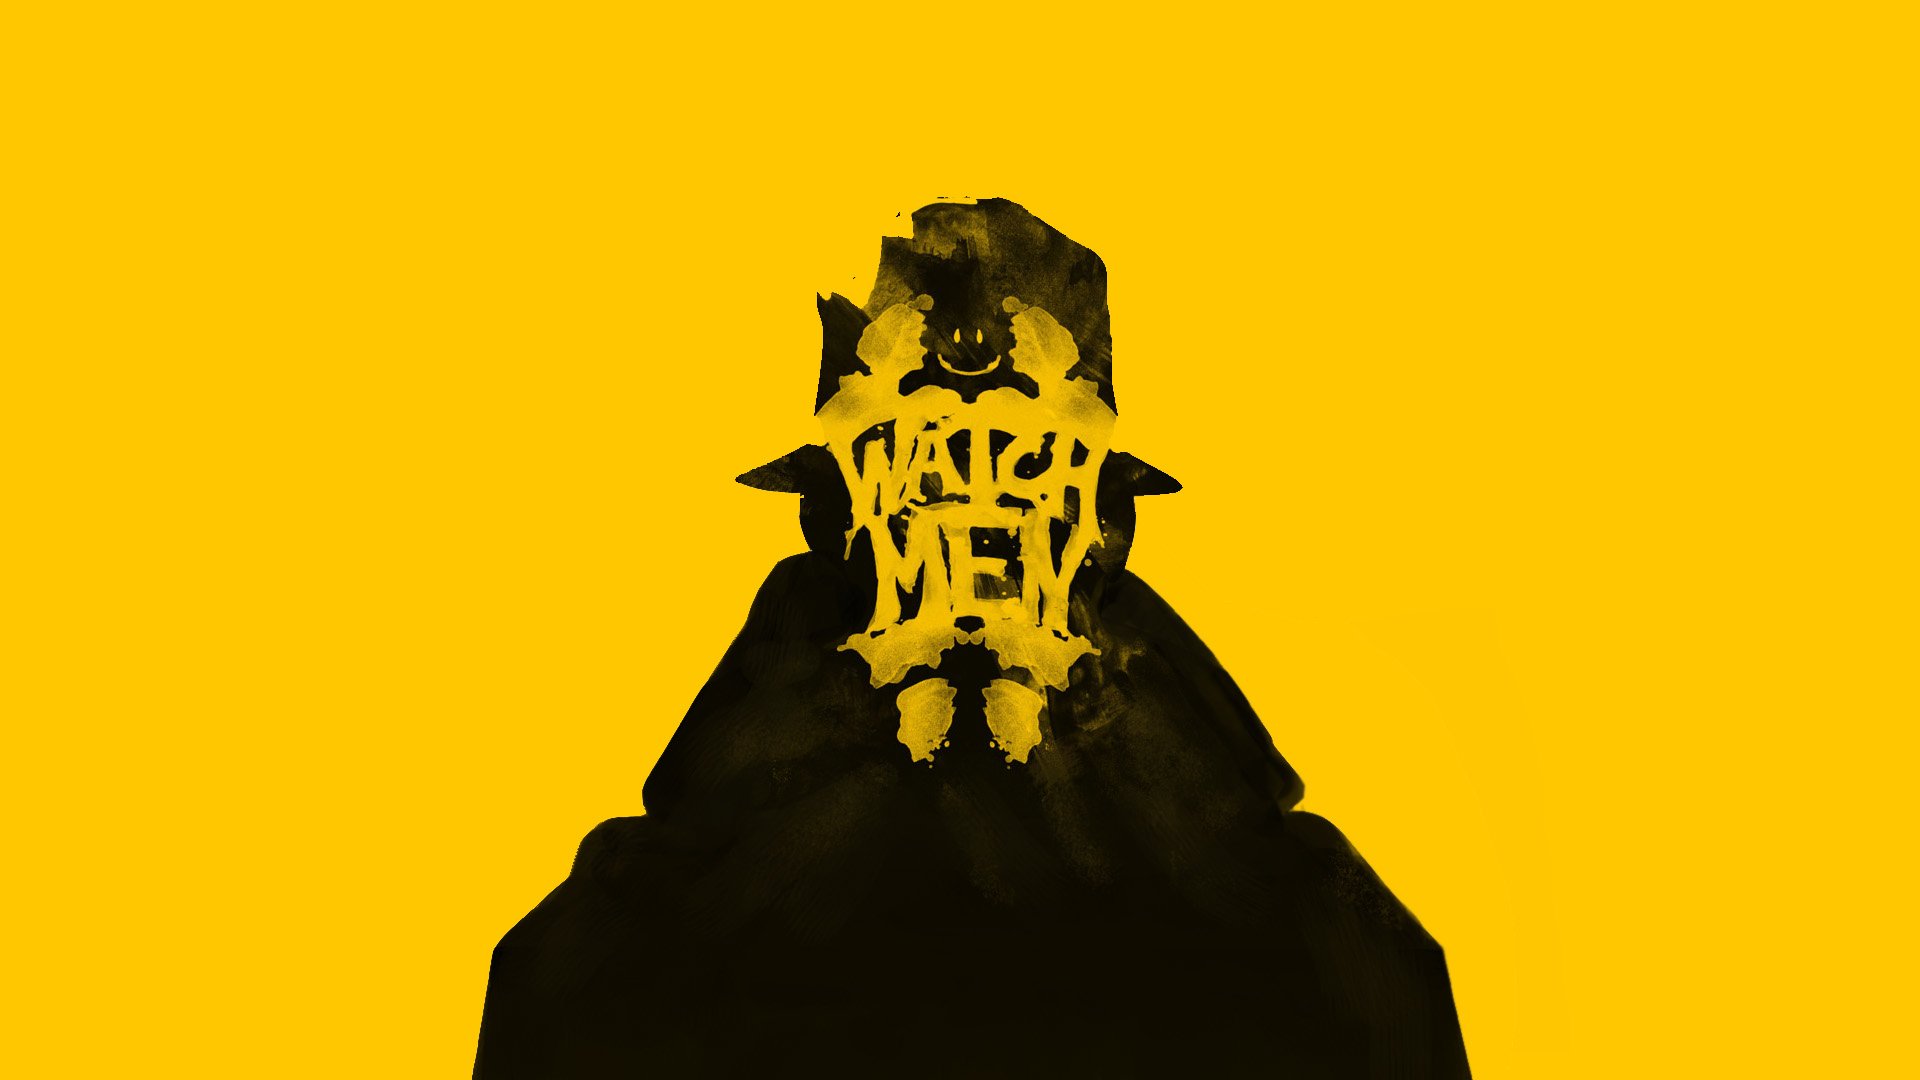 watchmen wallpaper hd,yellow,font,fictional character,illustration